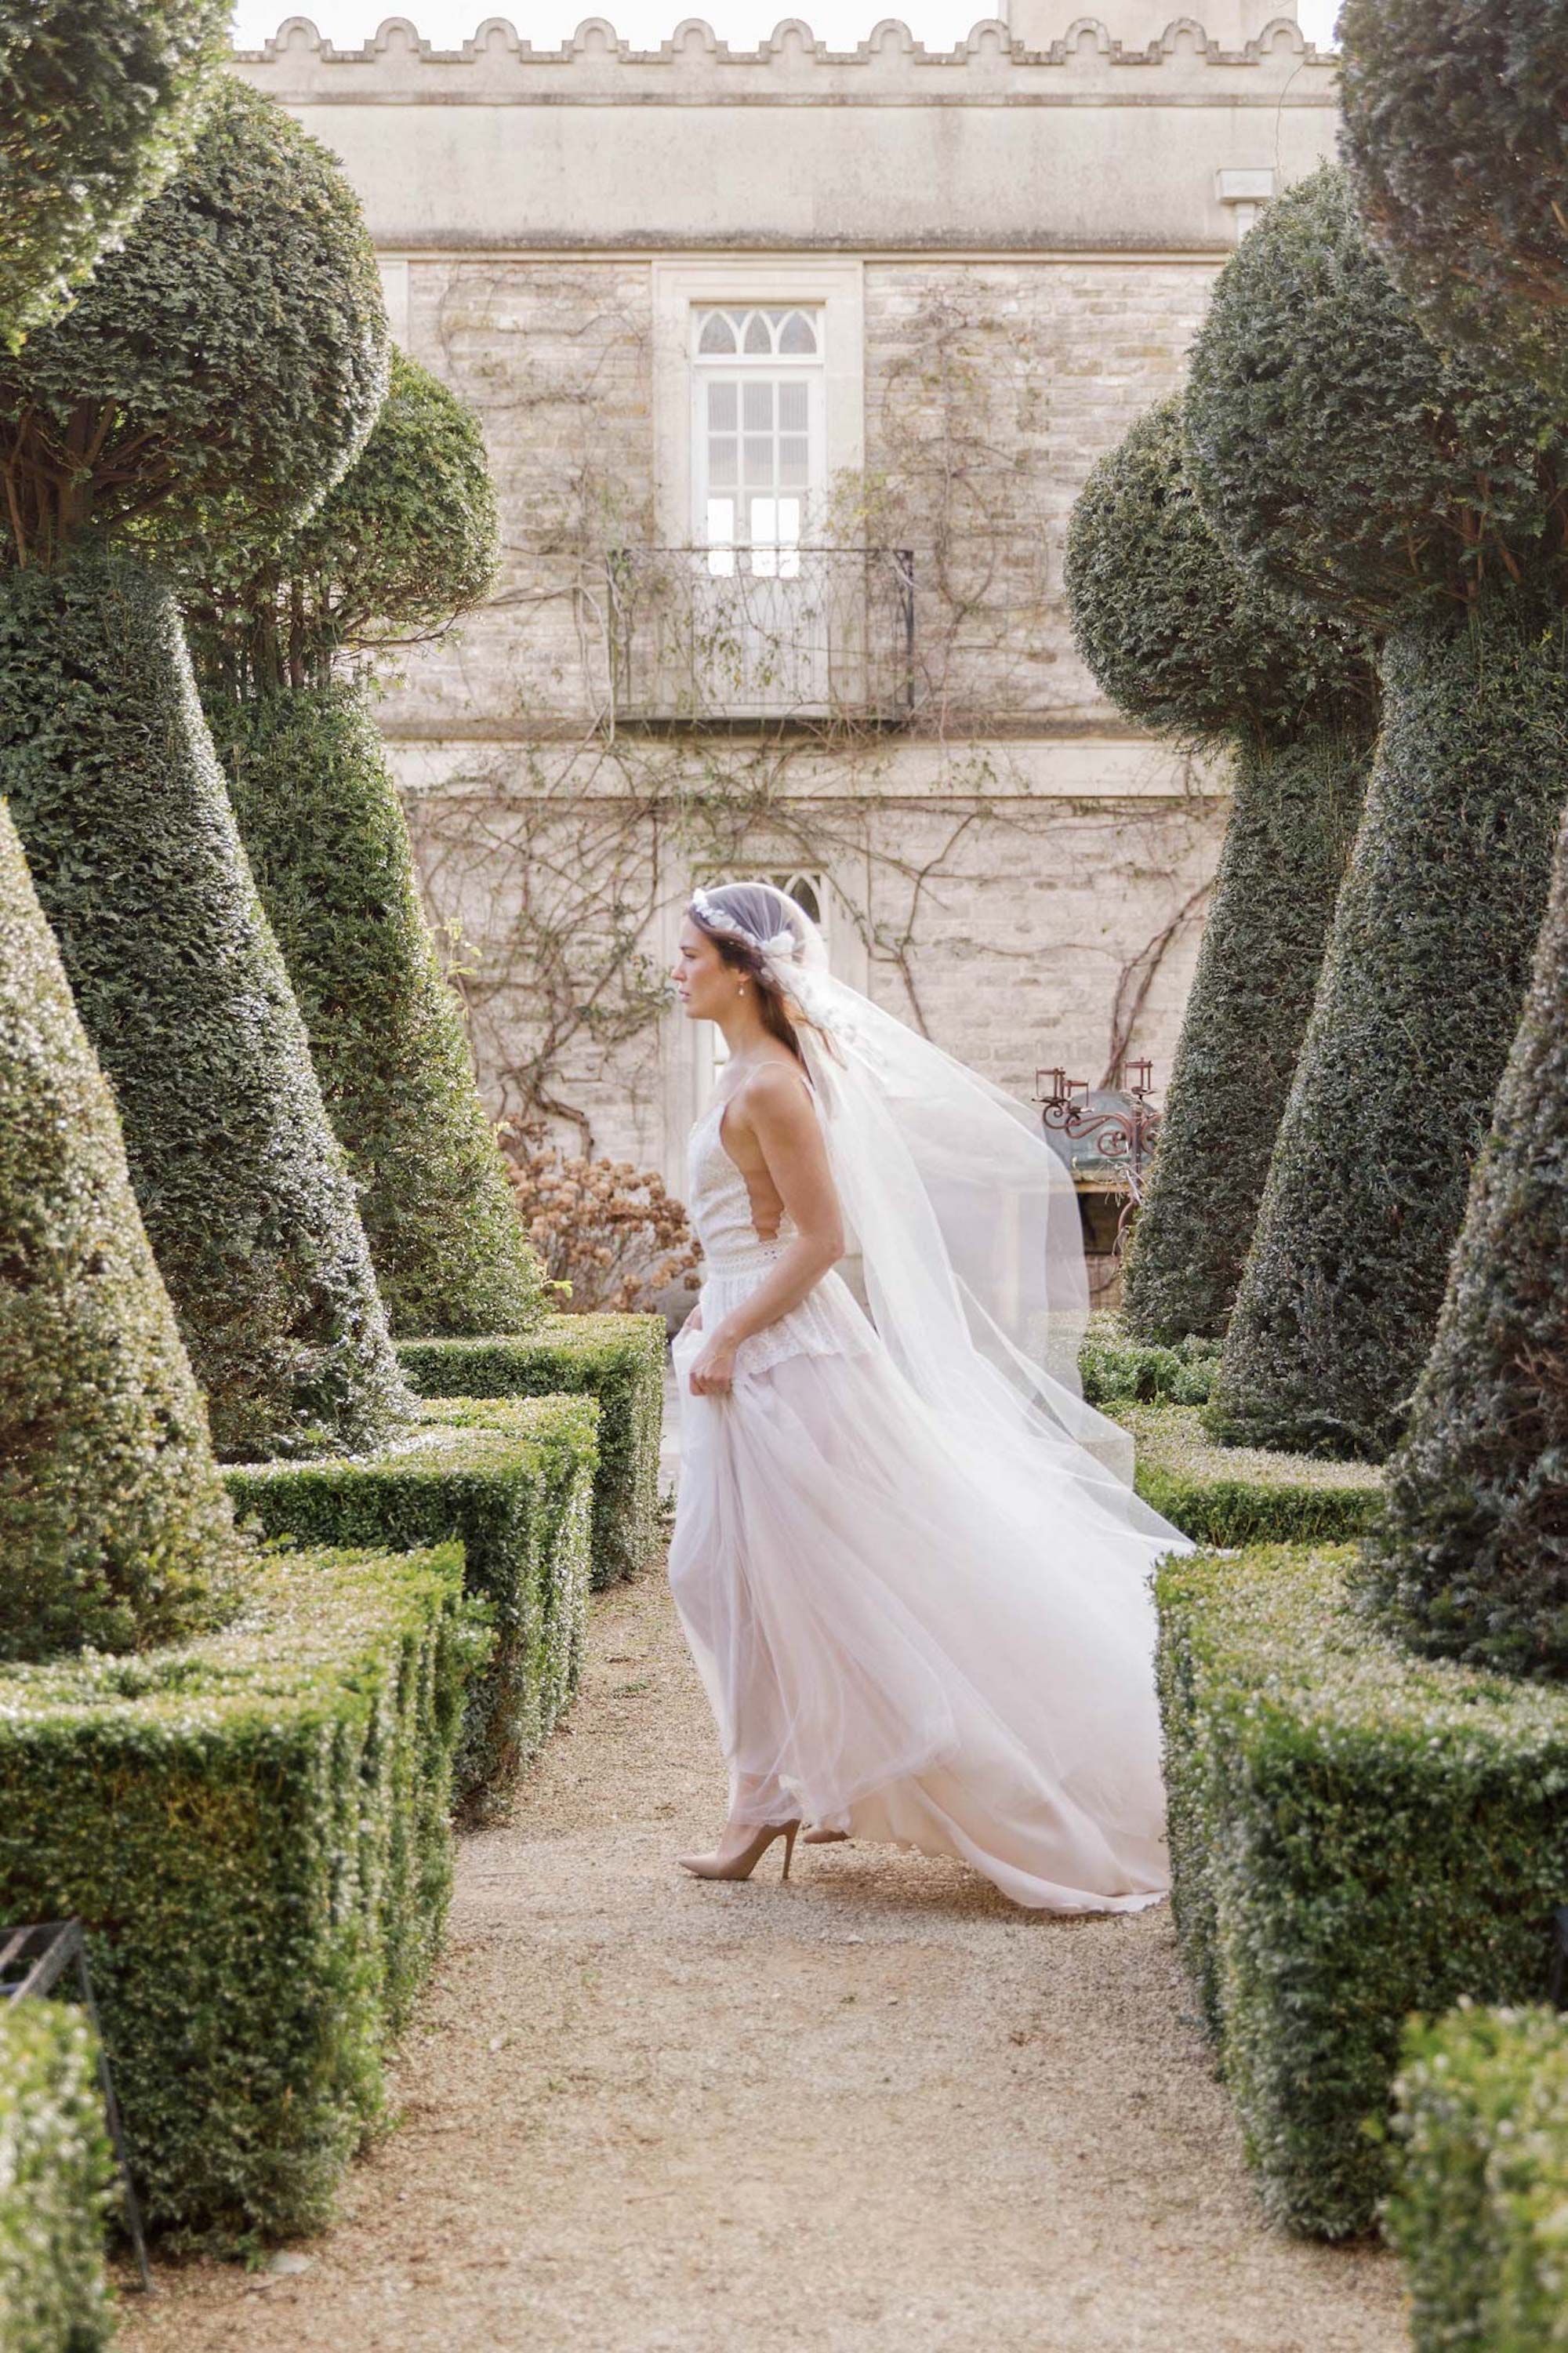 Bride walking through the grounds of Euridge Manor wedding venue, wearing a floaty Juliet Cap wedding veil.